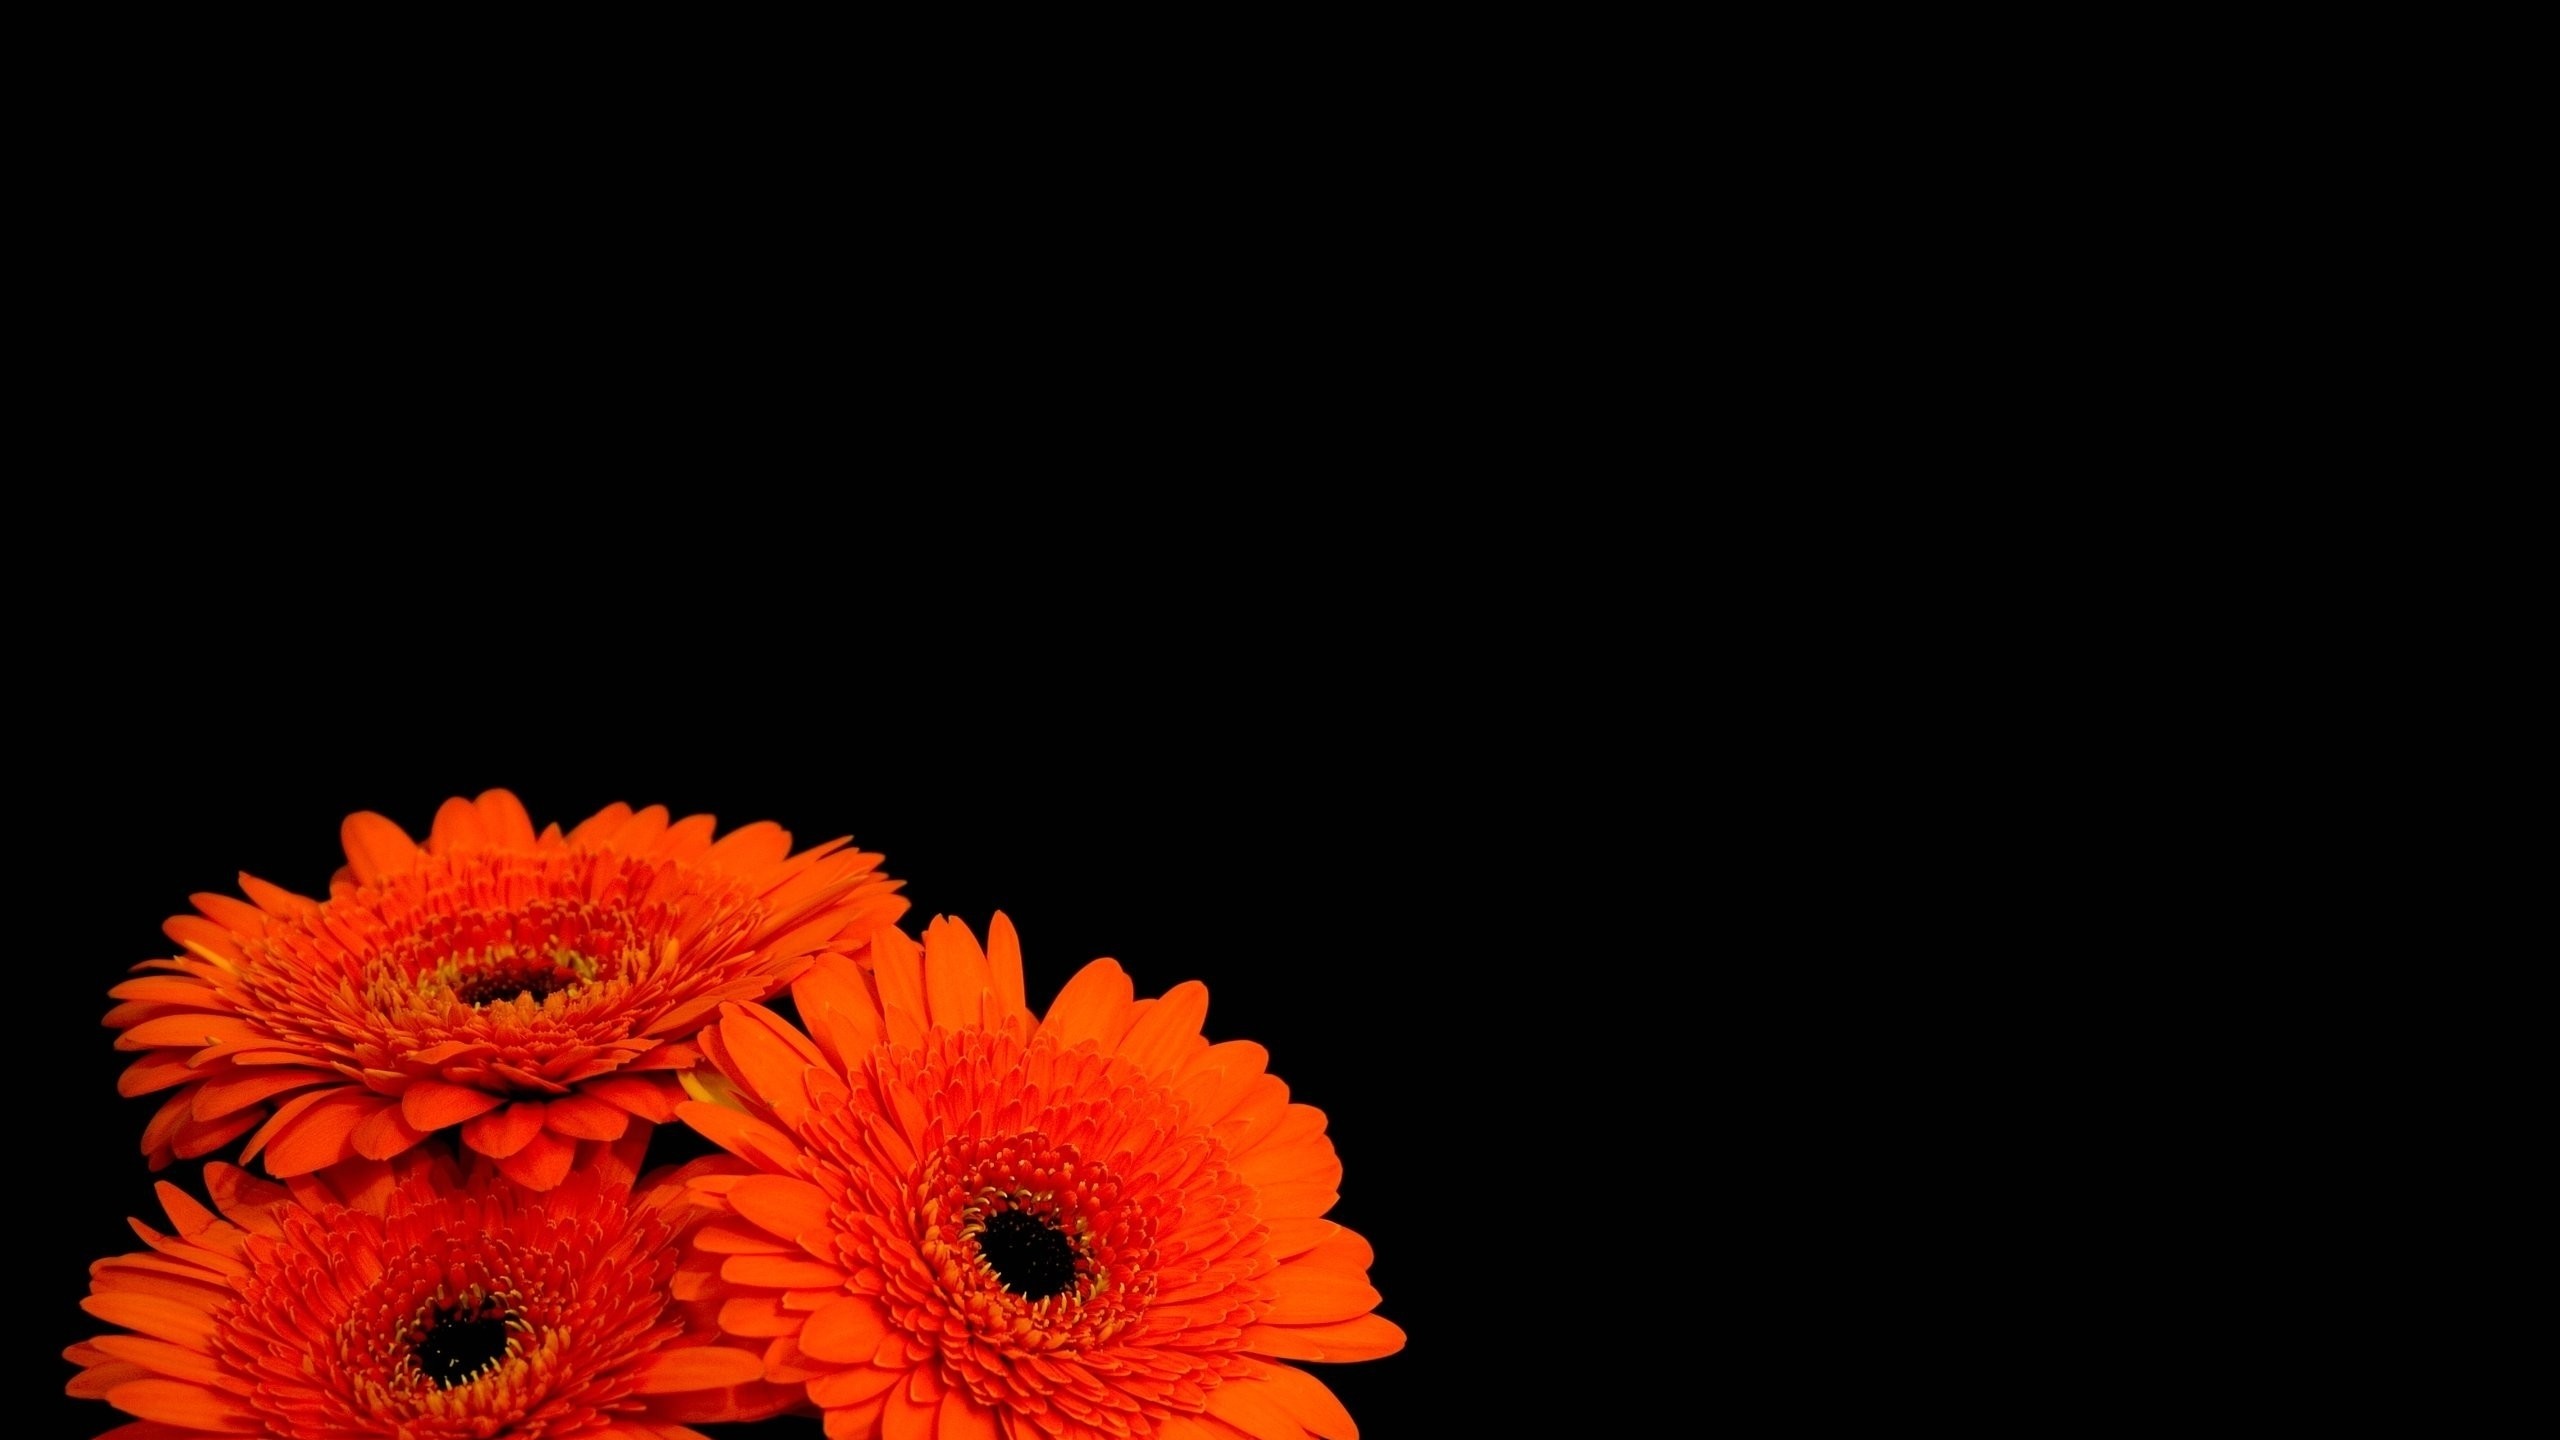 Description download flowers black background orange flowers wallpaperdesktop background in hd widescreen resolution